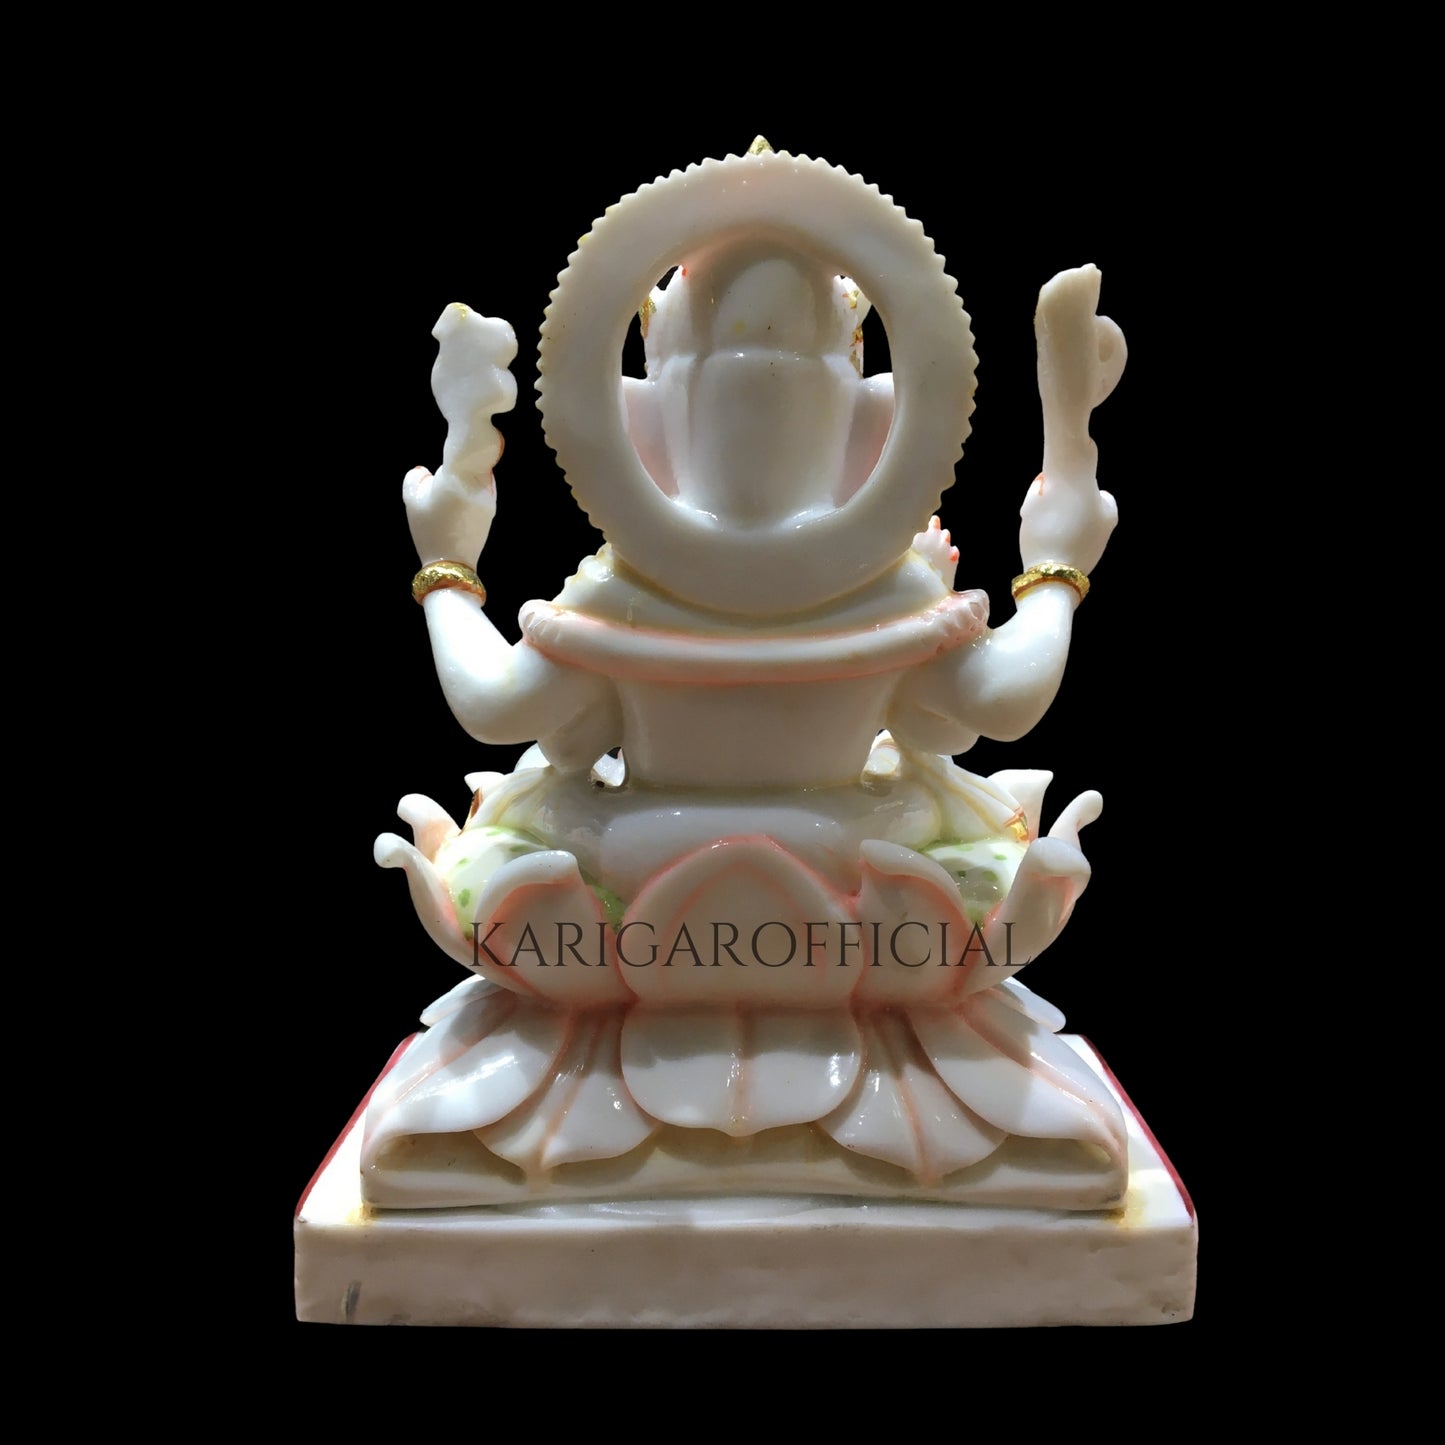 Ganesha Murti Statue Sitting on lotus flower - Large 12 inches Stone Jewelry Studded Ganpati Figurine - Marble Ganapati Idol - Vinayak Deity - Large Elephant God Figurine Housewarming Gifts Sculpture